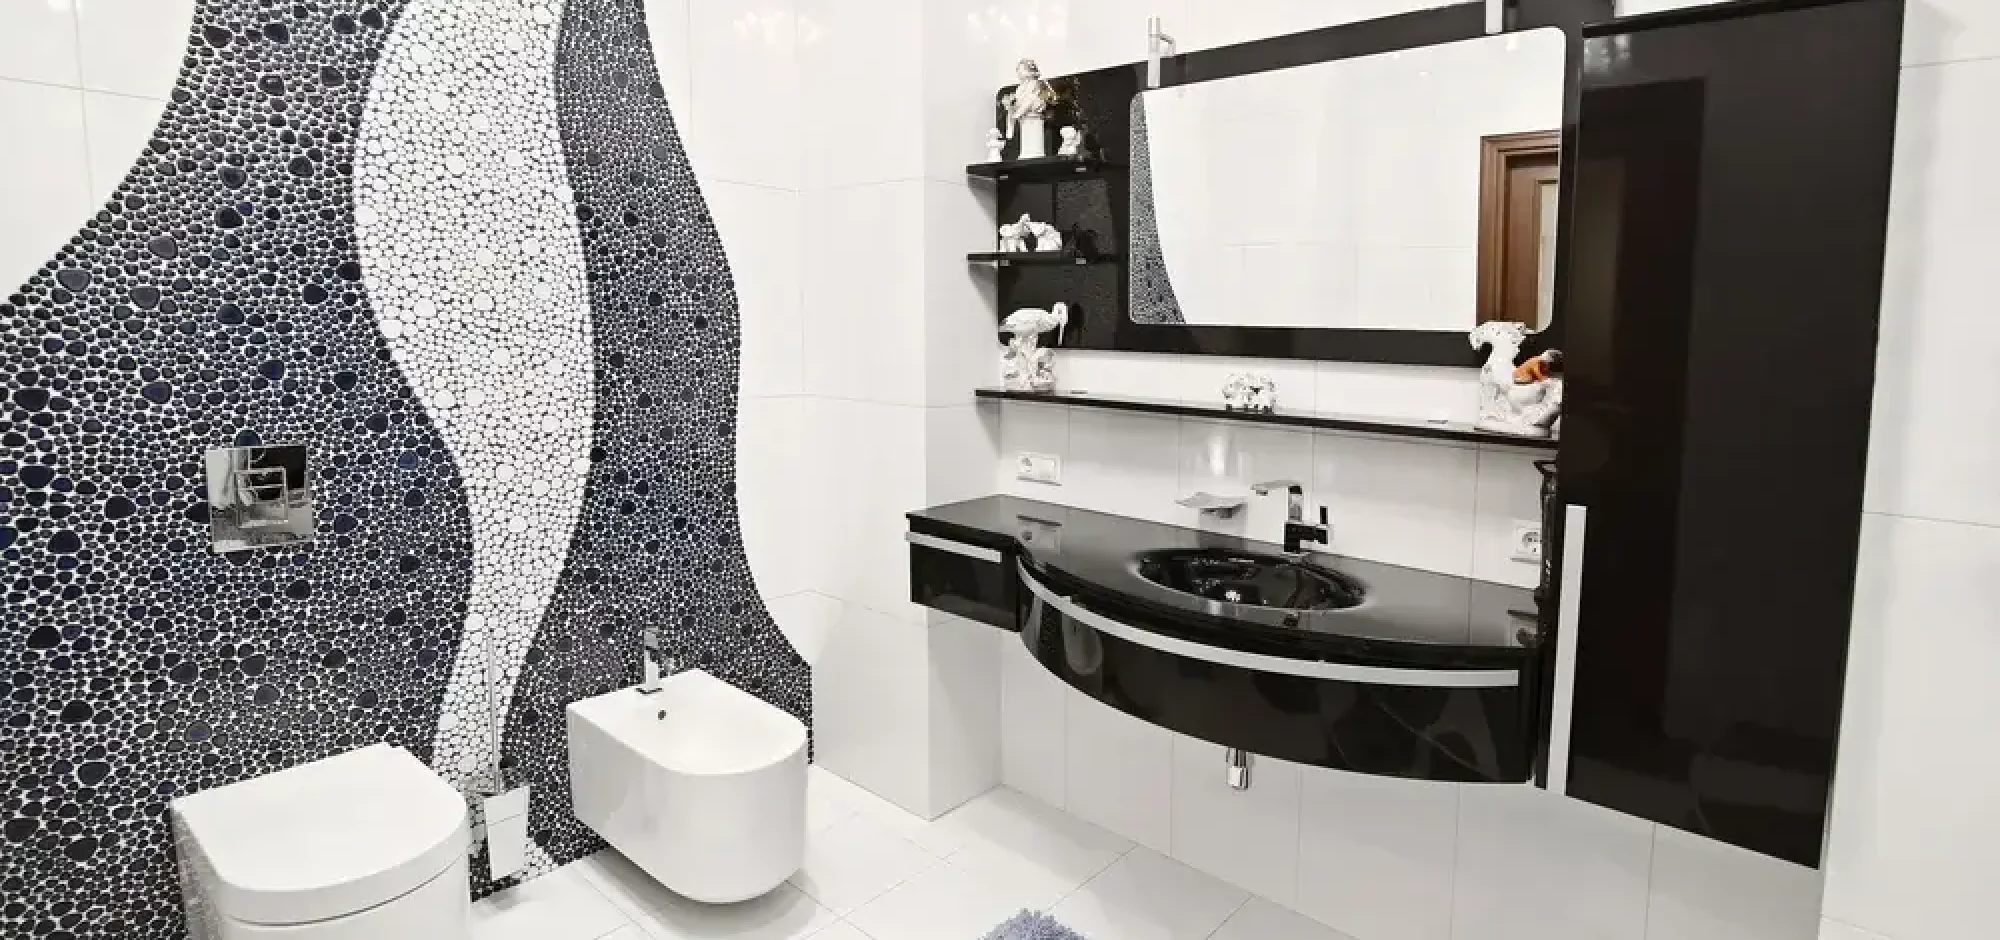 White Square Tile Bathroom 2 (1)